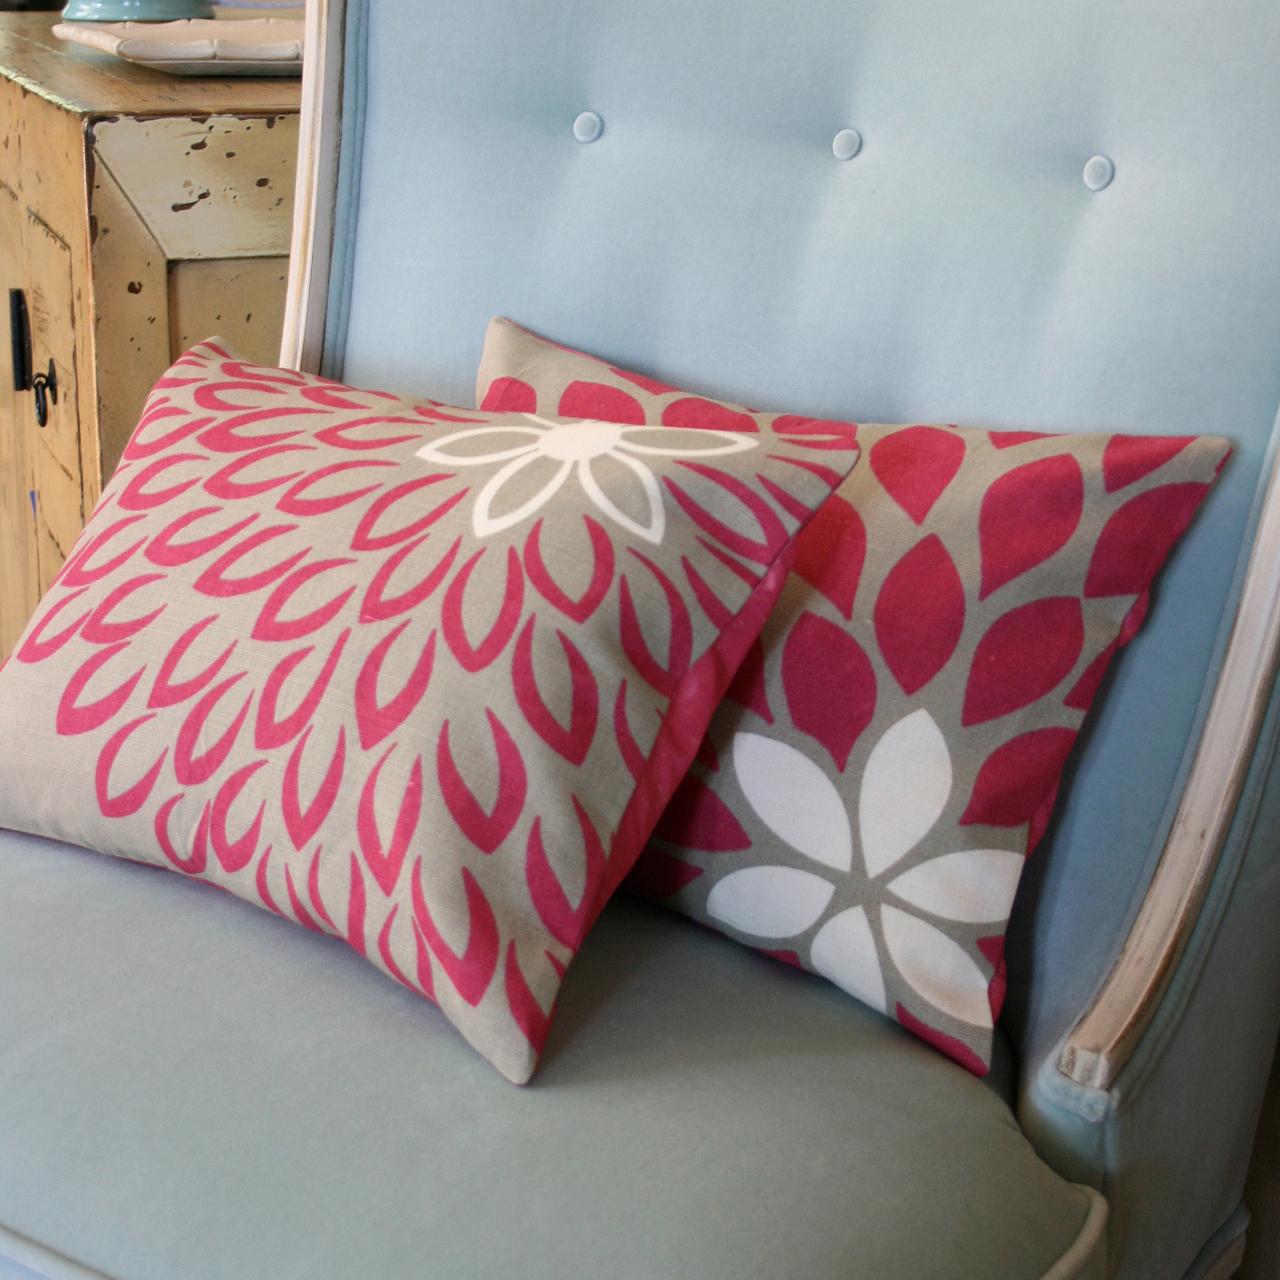 DIY Personalized Pillows - 3 Ways! - HGTV Handmade 